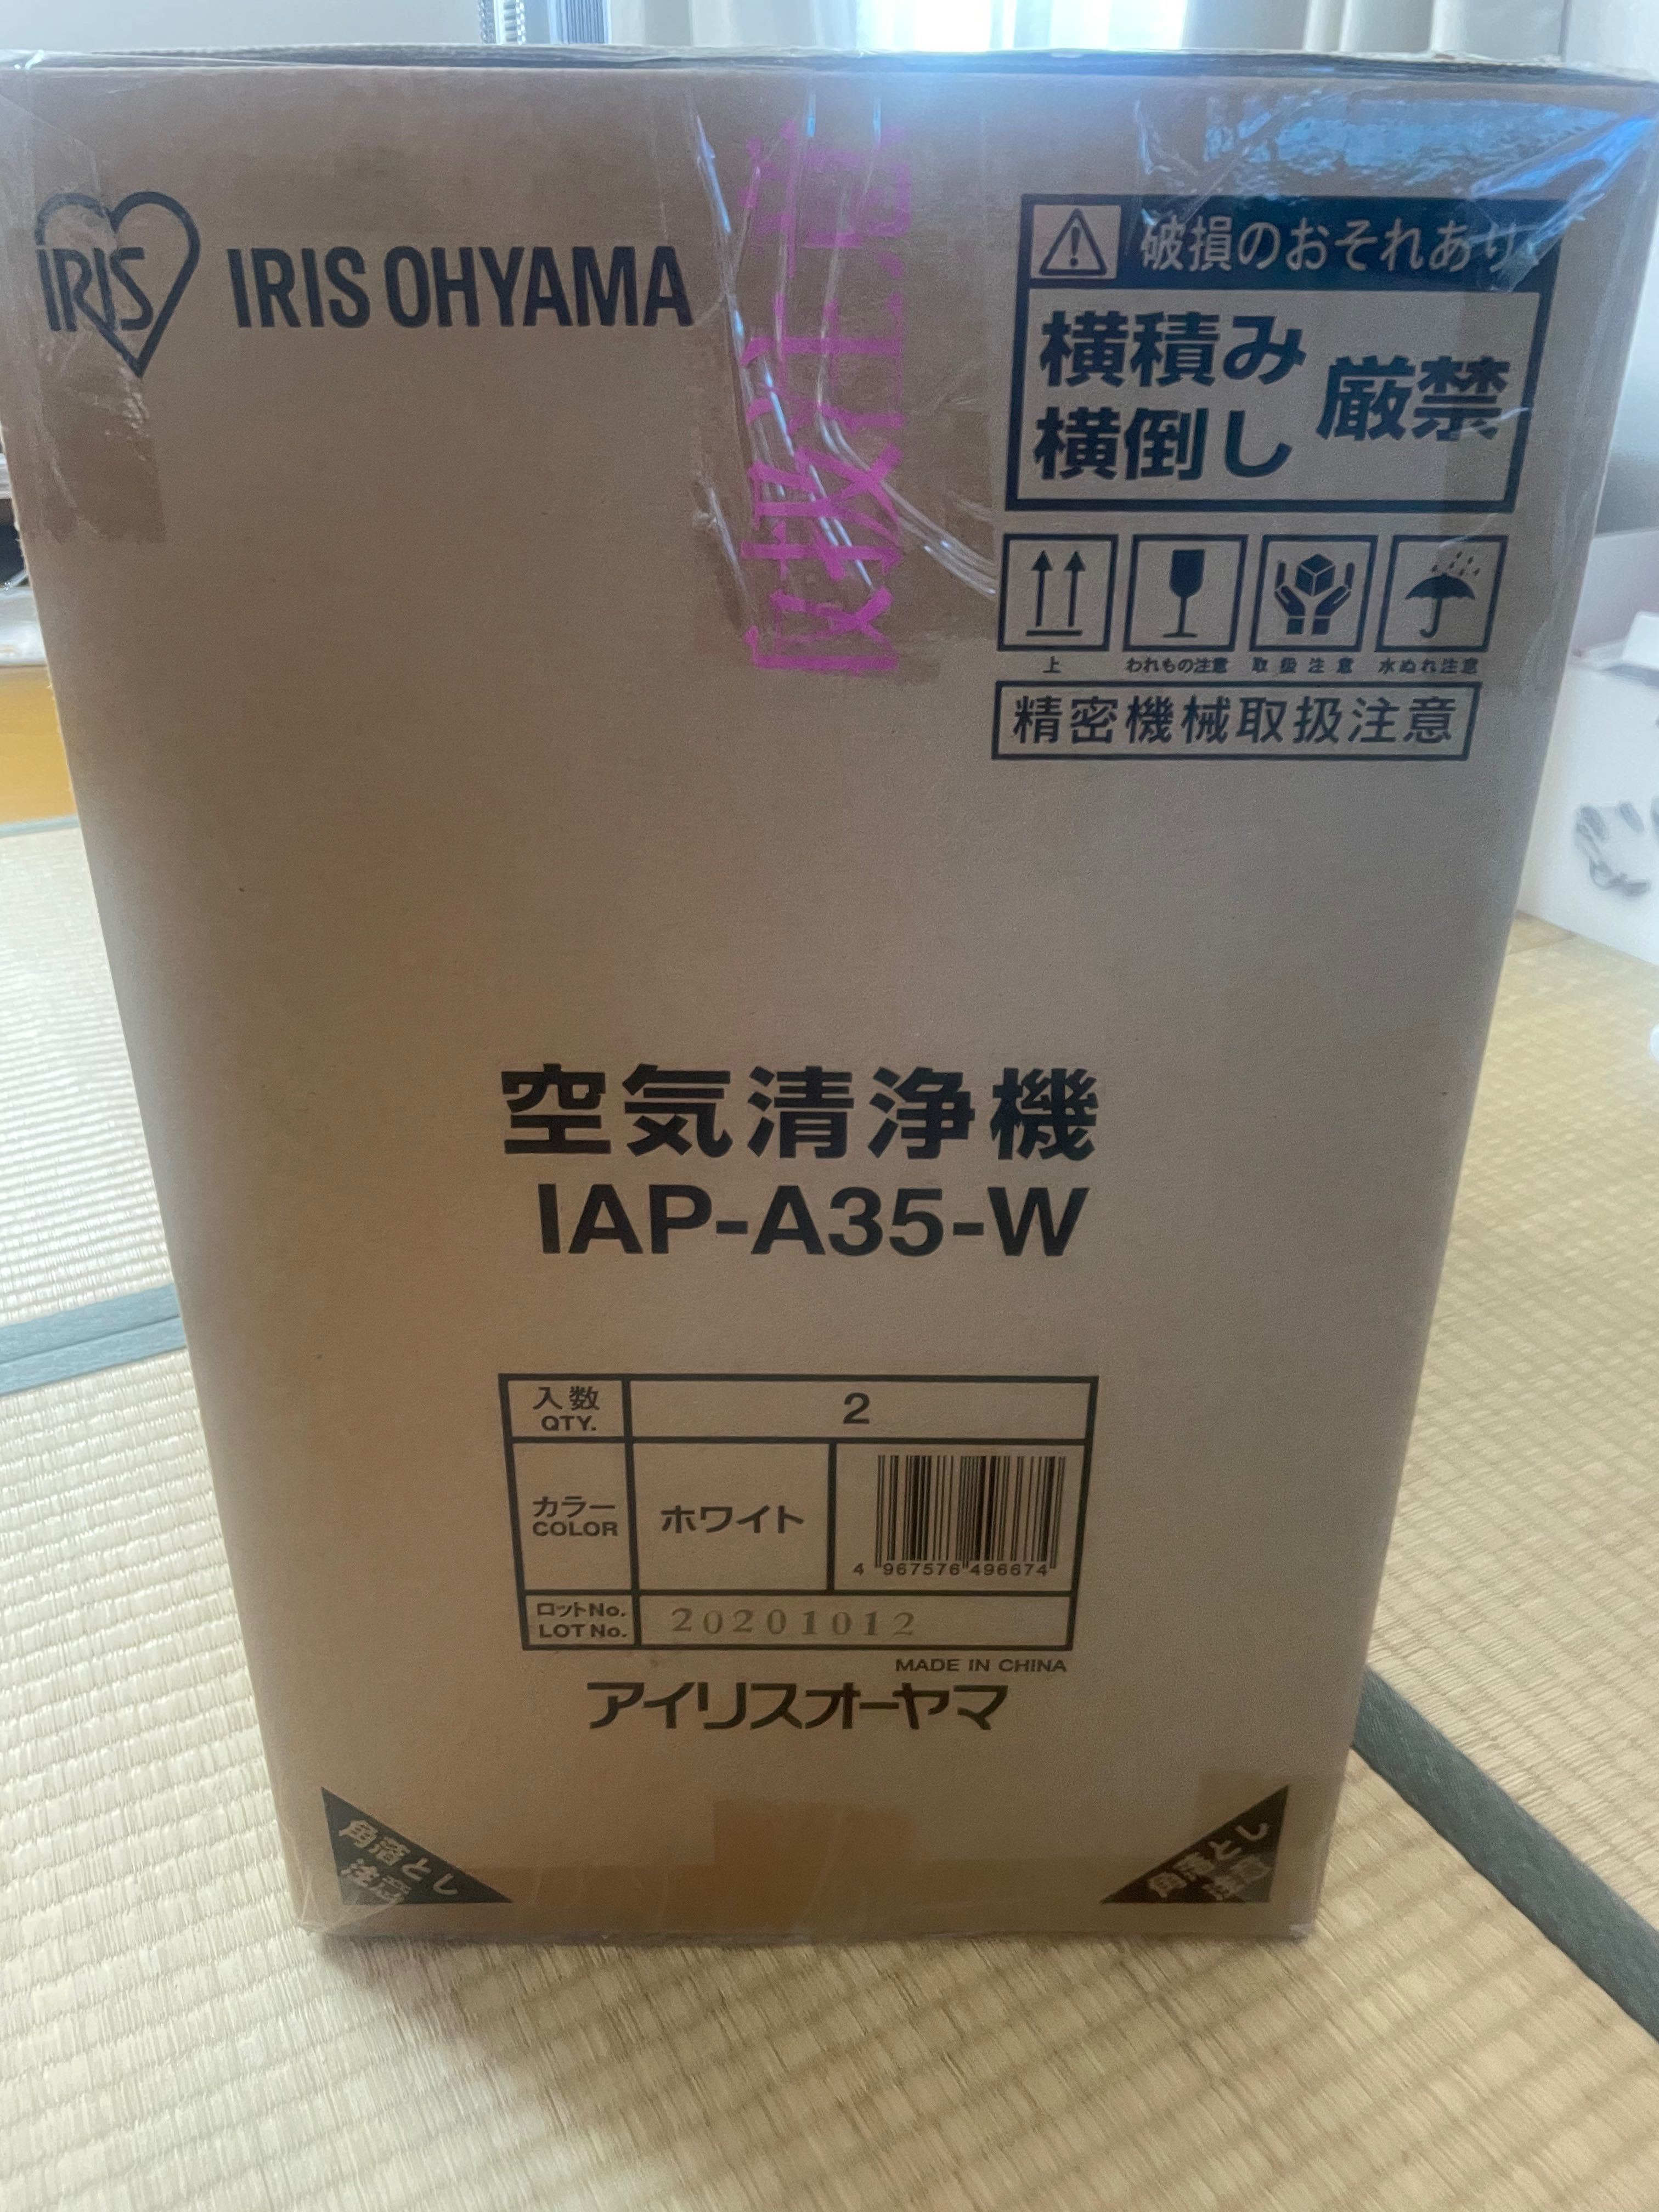 IRIS OHYAMA 空気清浄機 IAP-A35-W アイリスオーヤマ